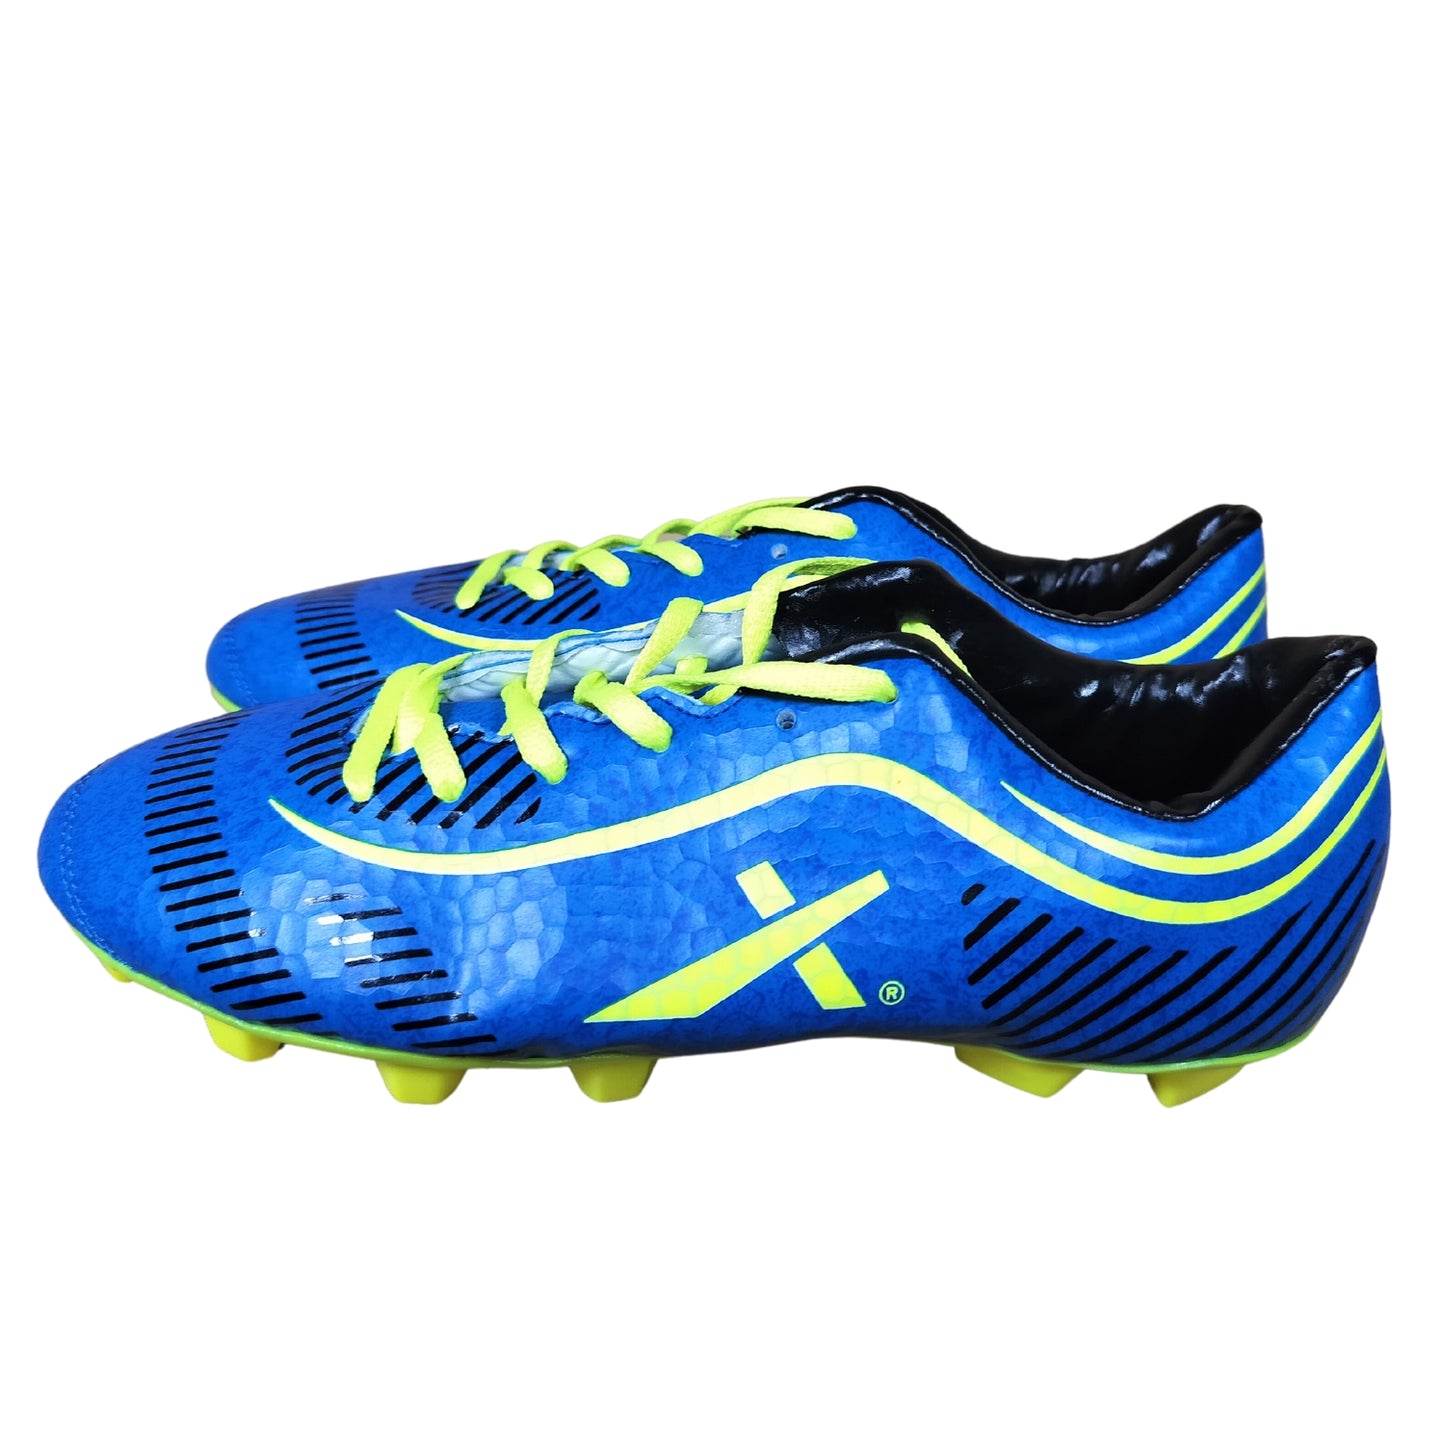 Vector X Electra Kid's Football Studs Sports Shoe, Blue/Blck/Green - Best Price online Prokicksports.com